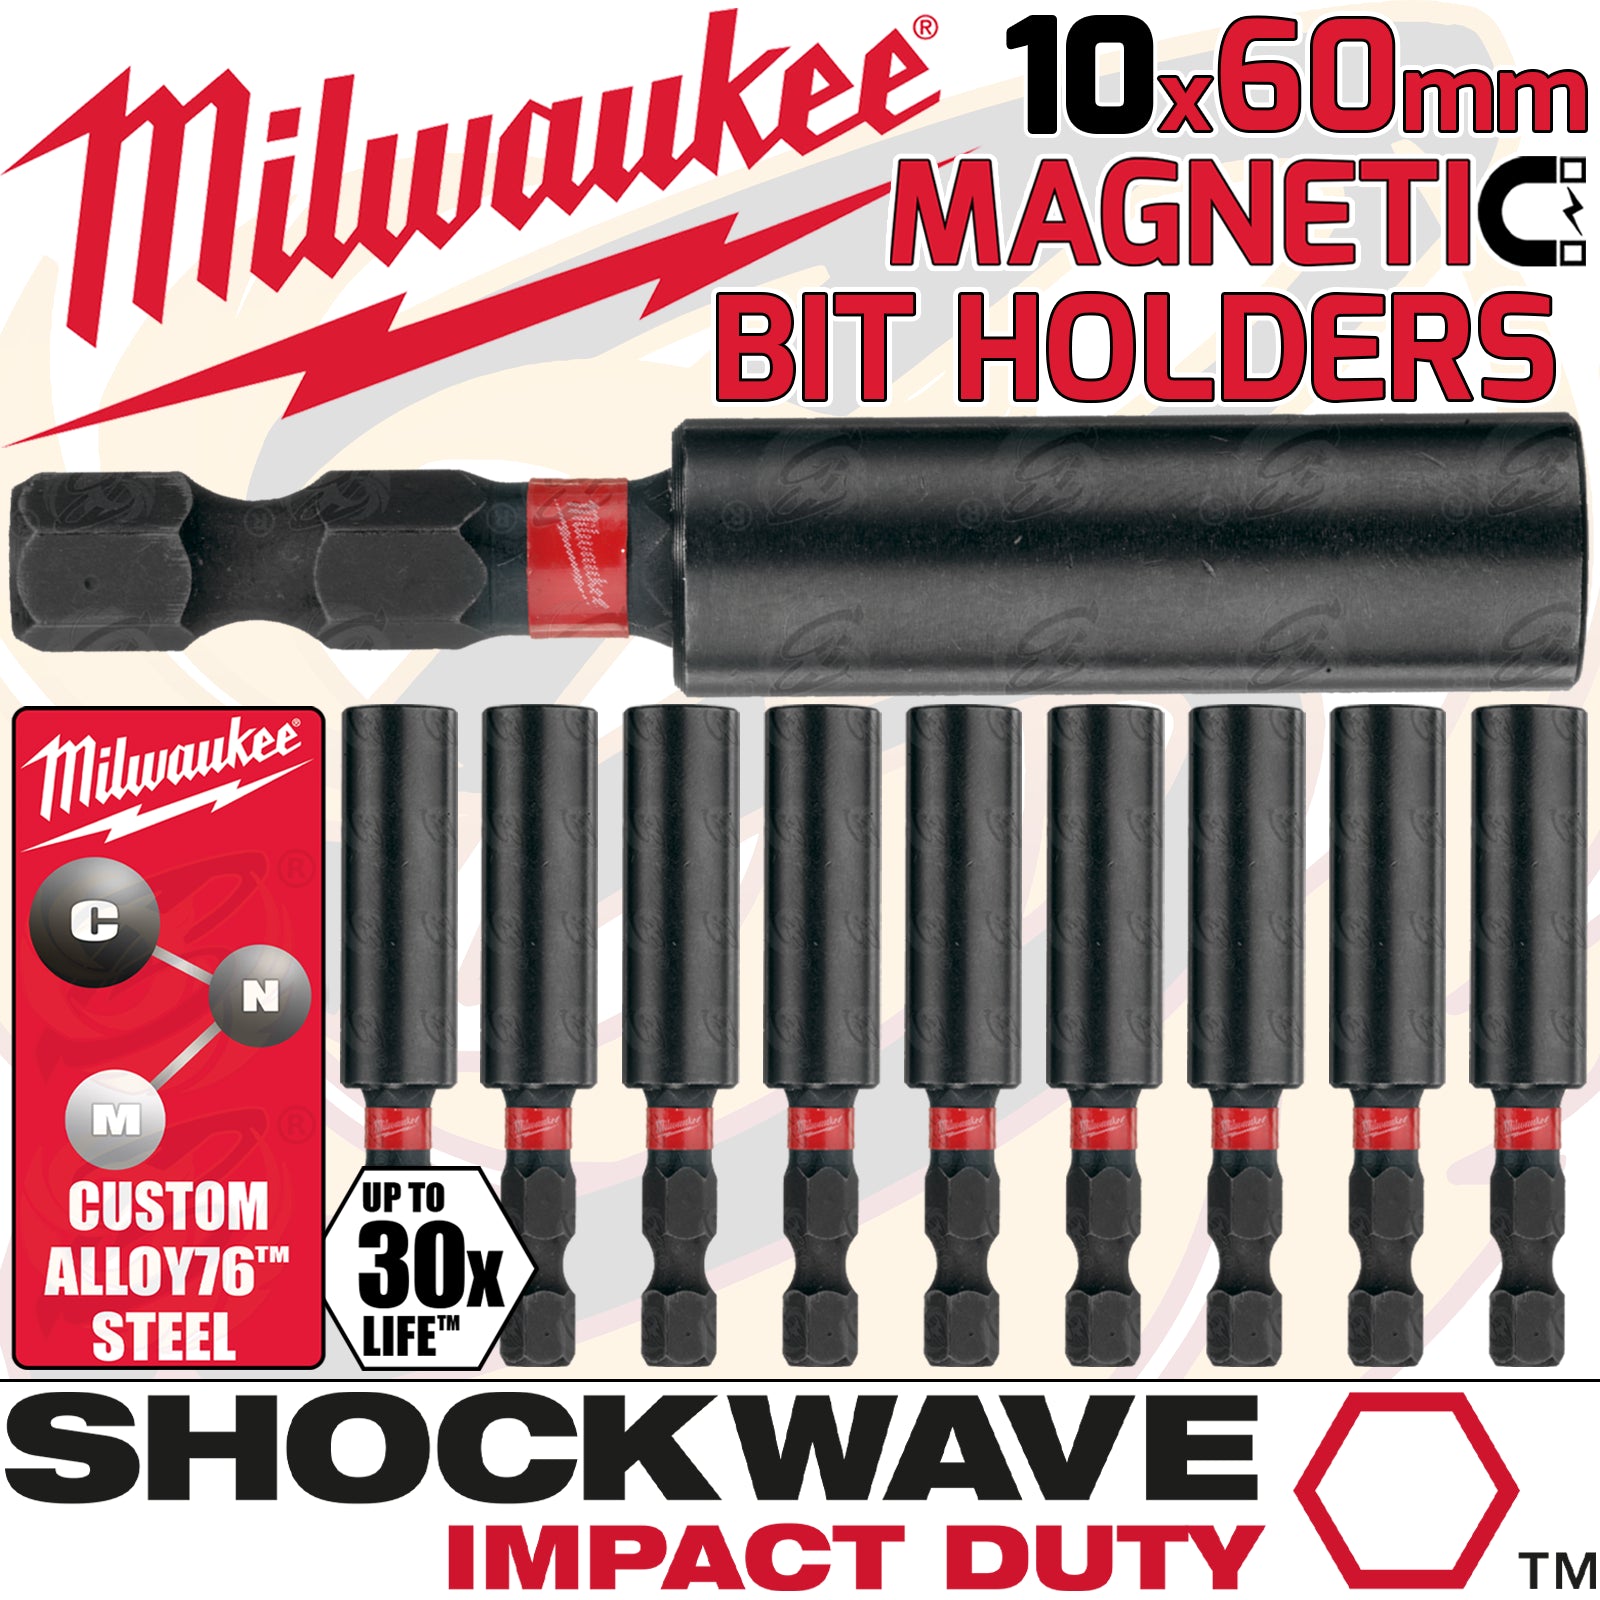 MILWAUKEE 60MM MAGNETIC BIT HOLDER ( SHOCKWAVE IMPACT DUTY ) ( X 10 )